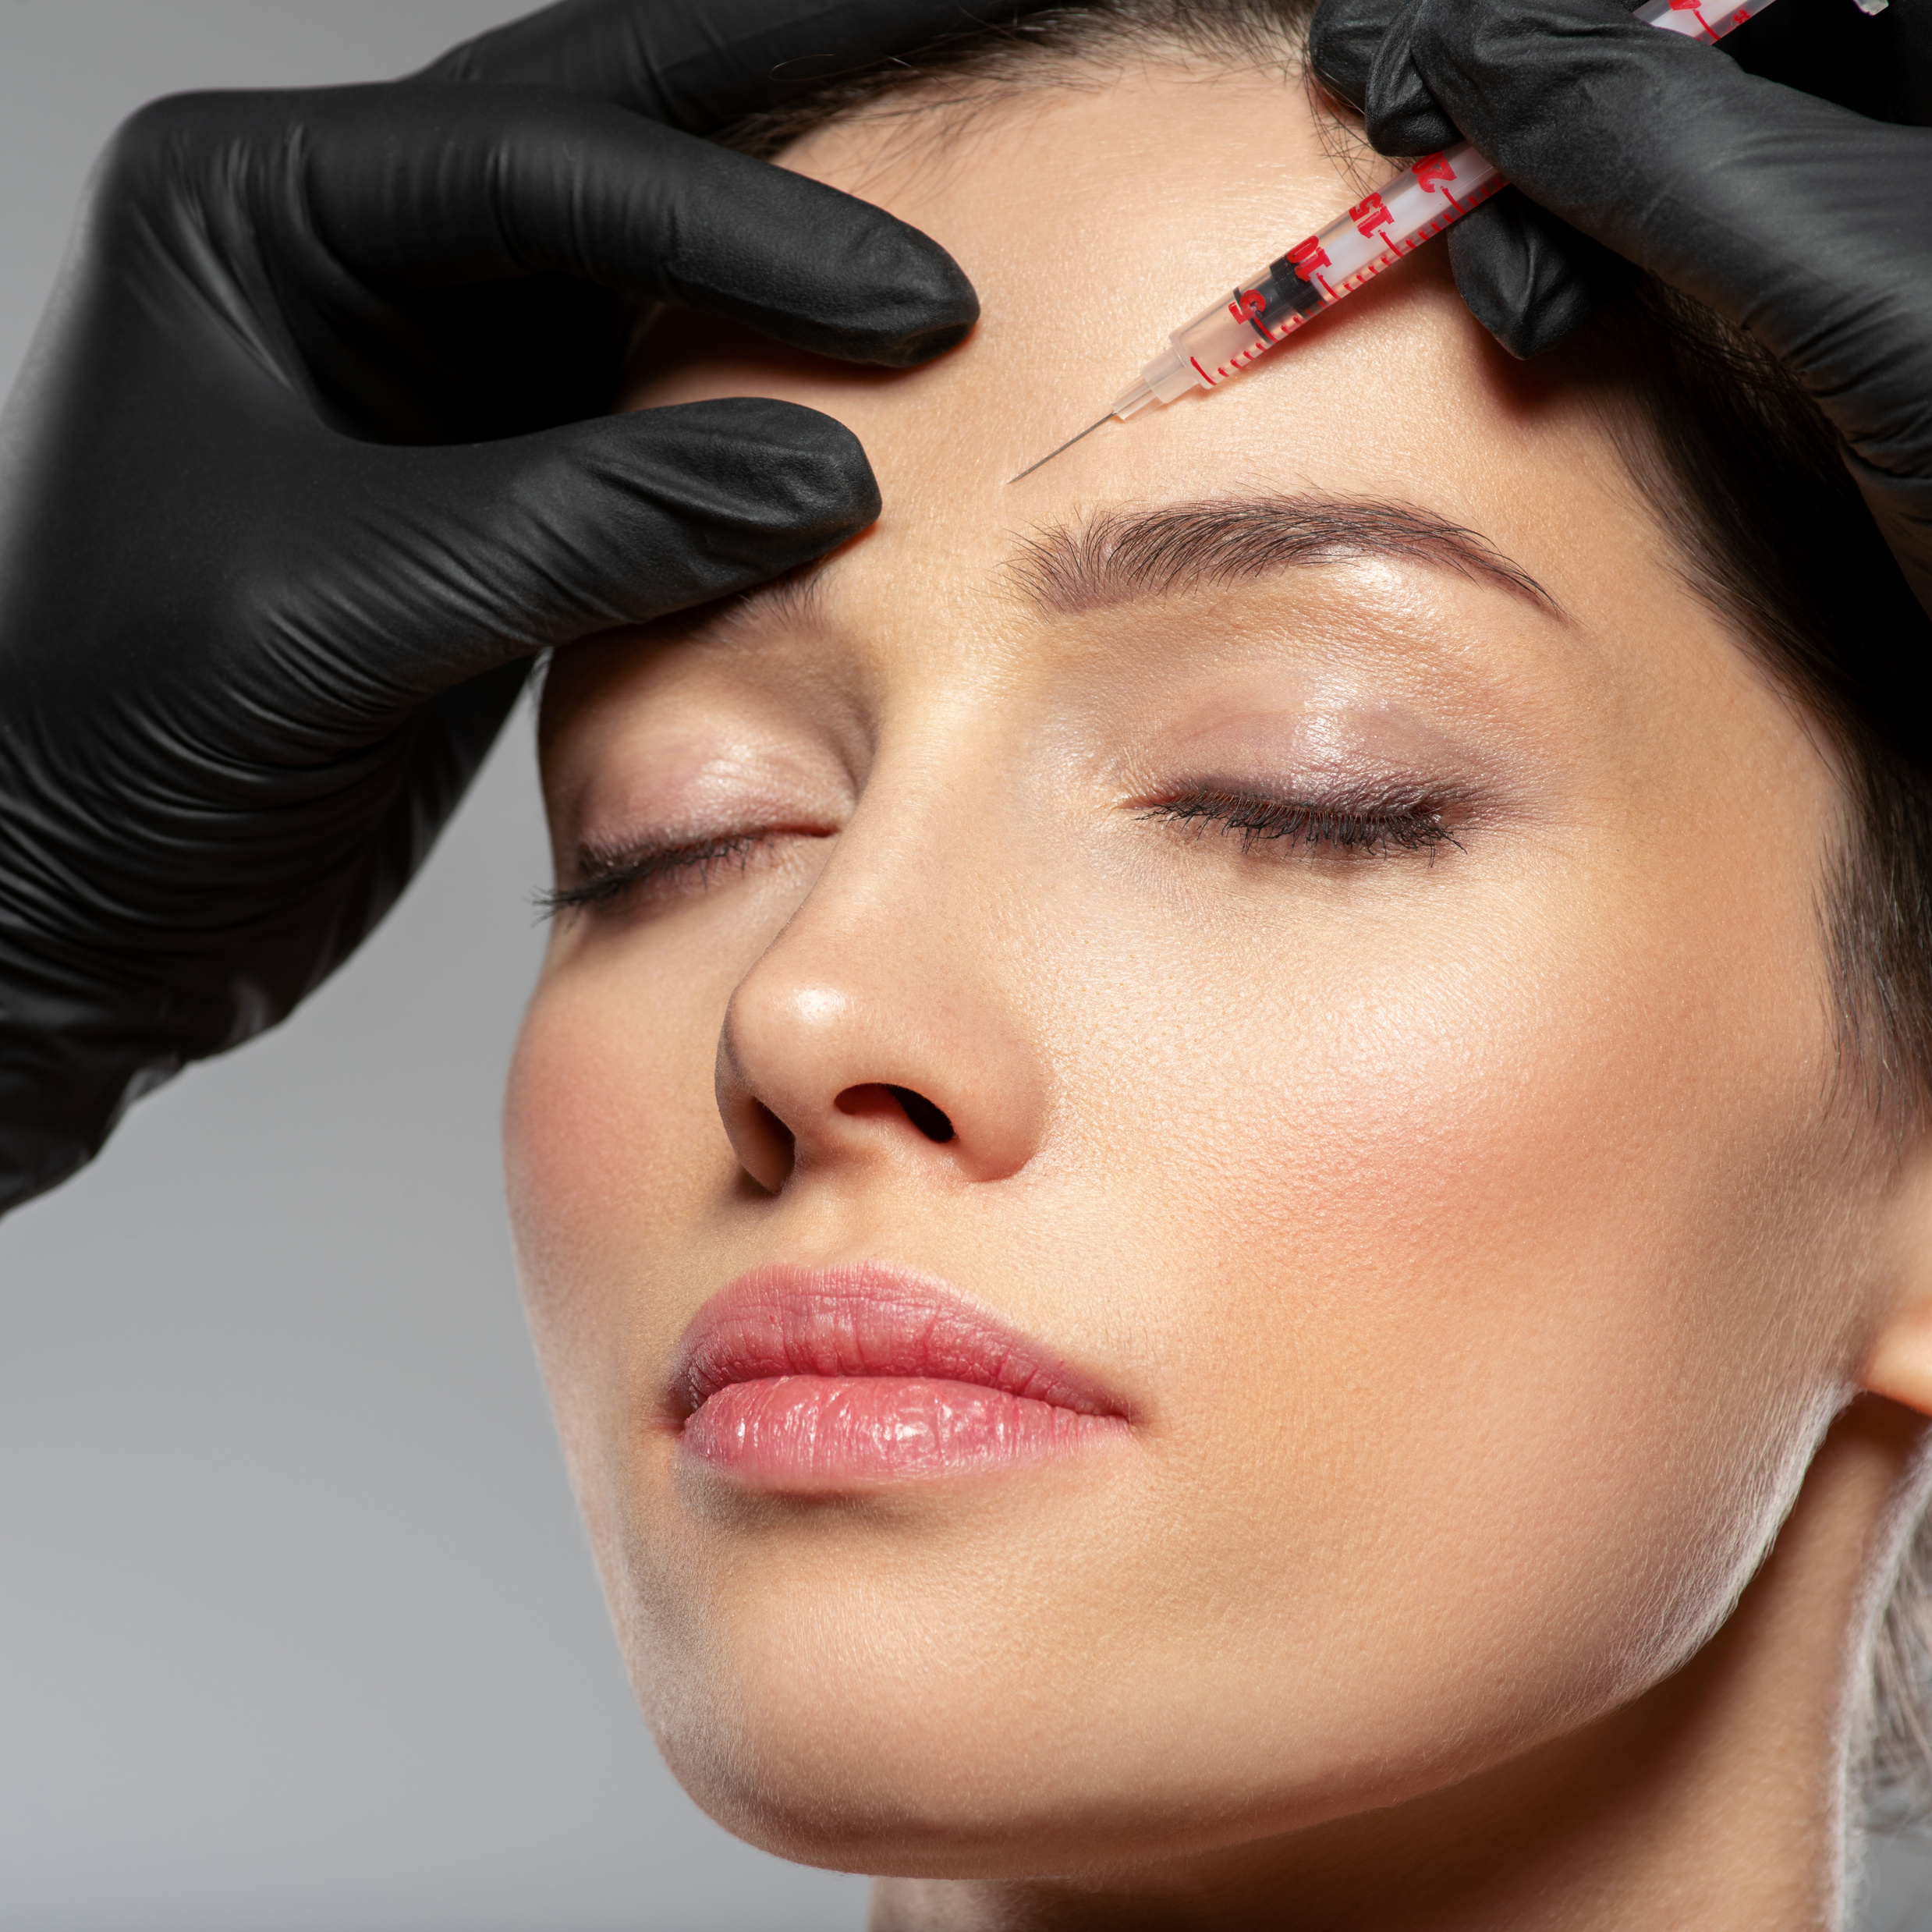 Caucasian Woman Getting Botox Cosmetic Injection in Forehead. Wo